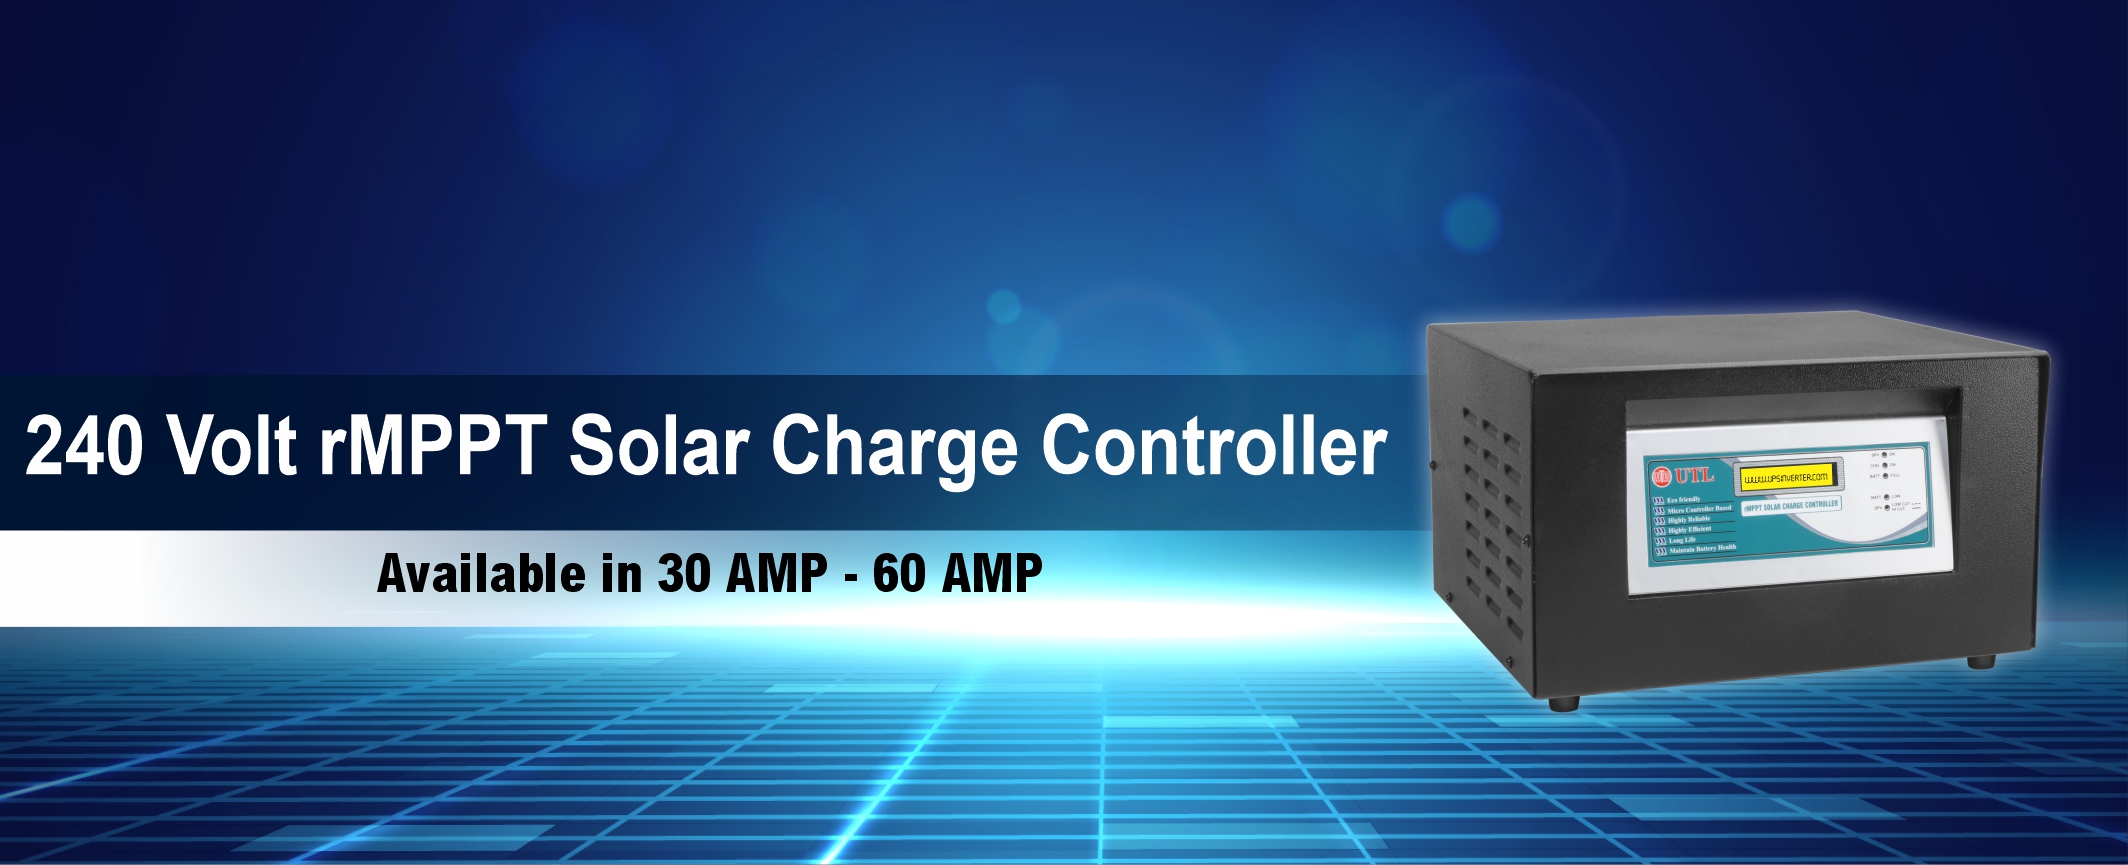 240 volt solar charge controller